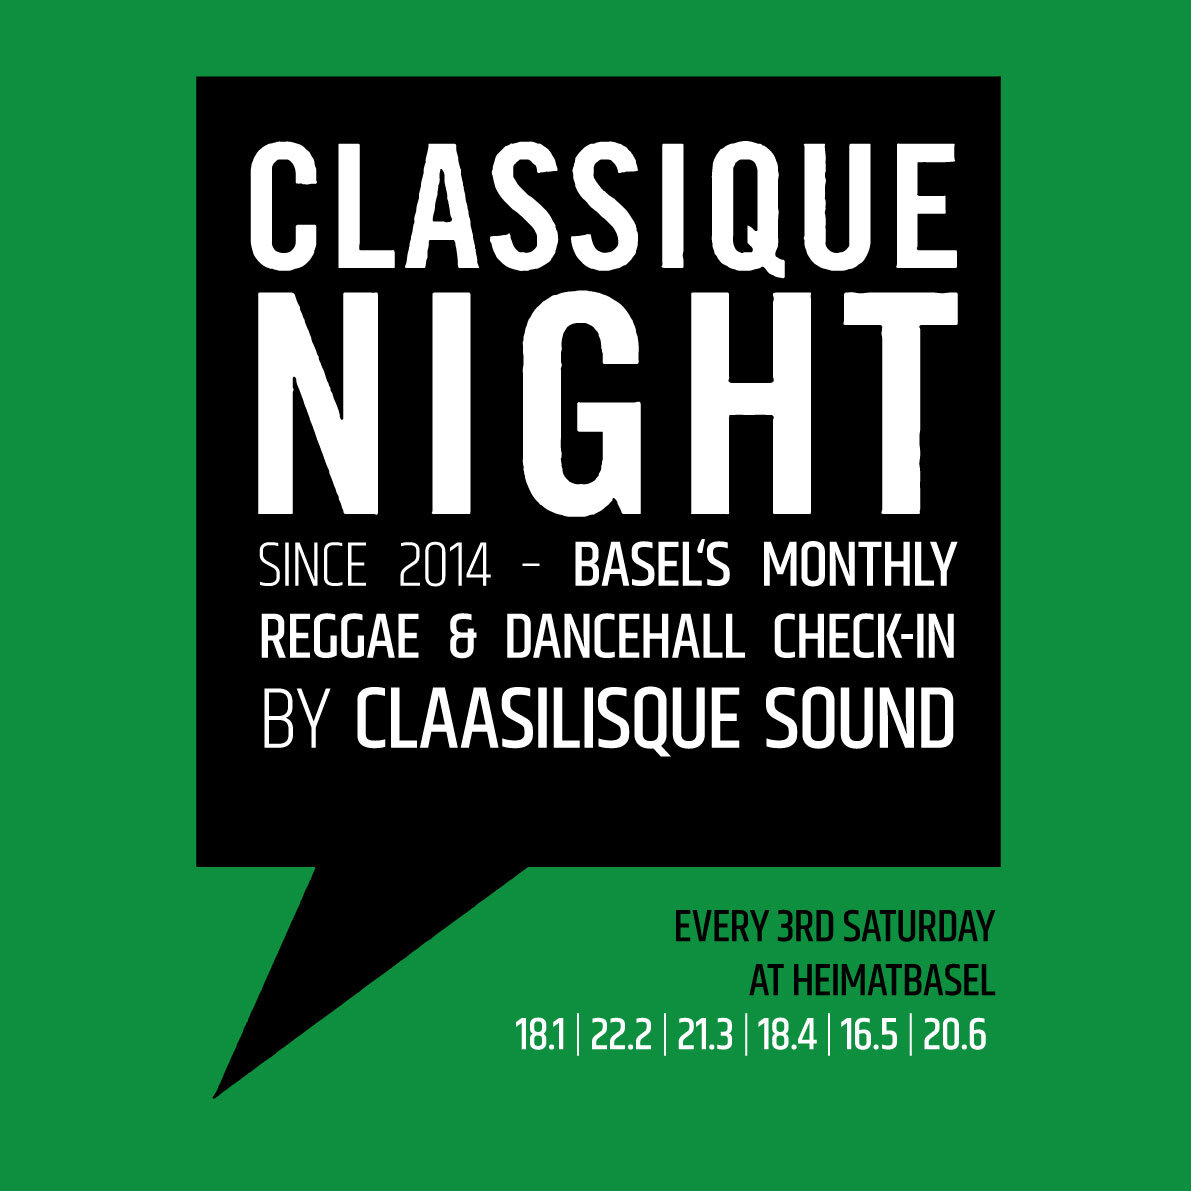 Classique Night - Season 1/2020 - Q (Copy)